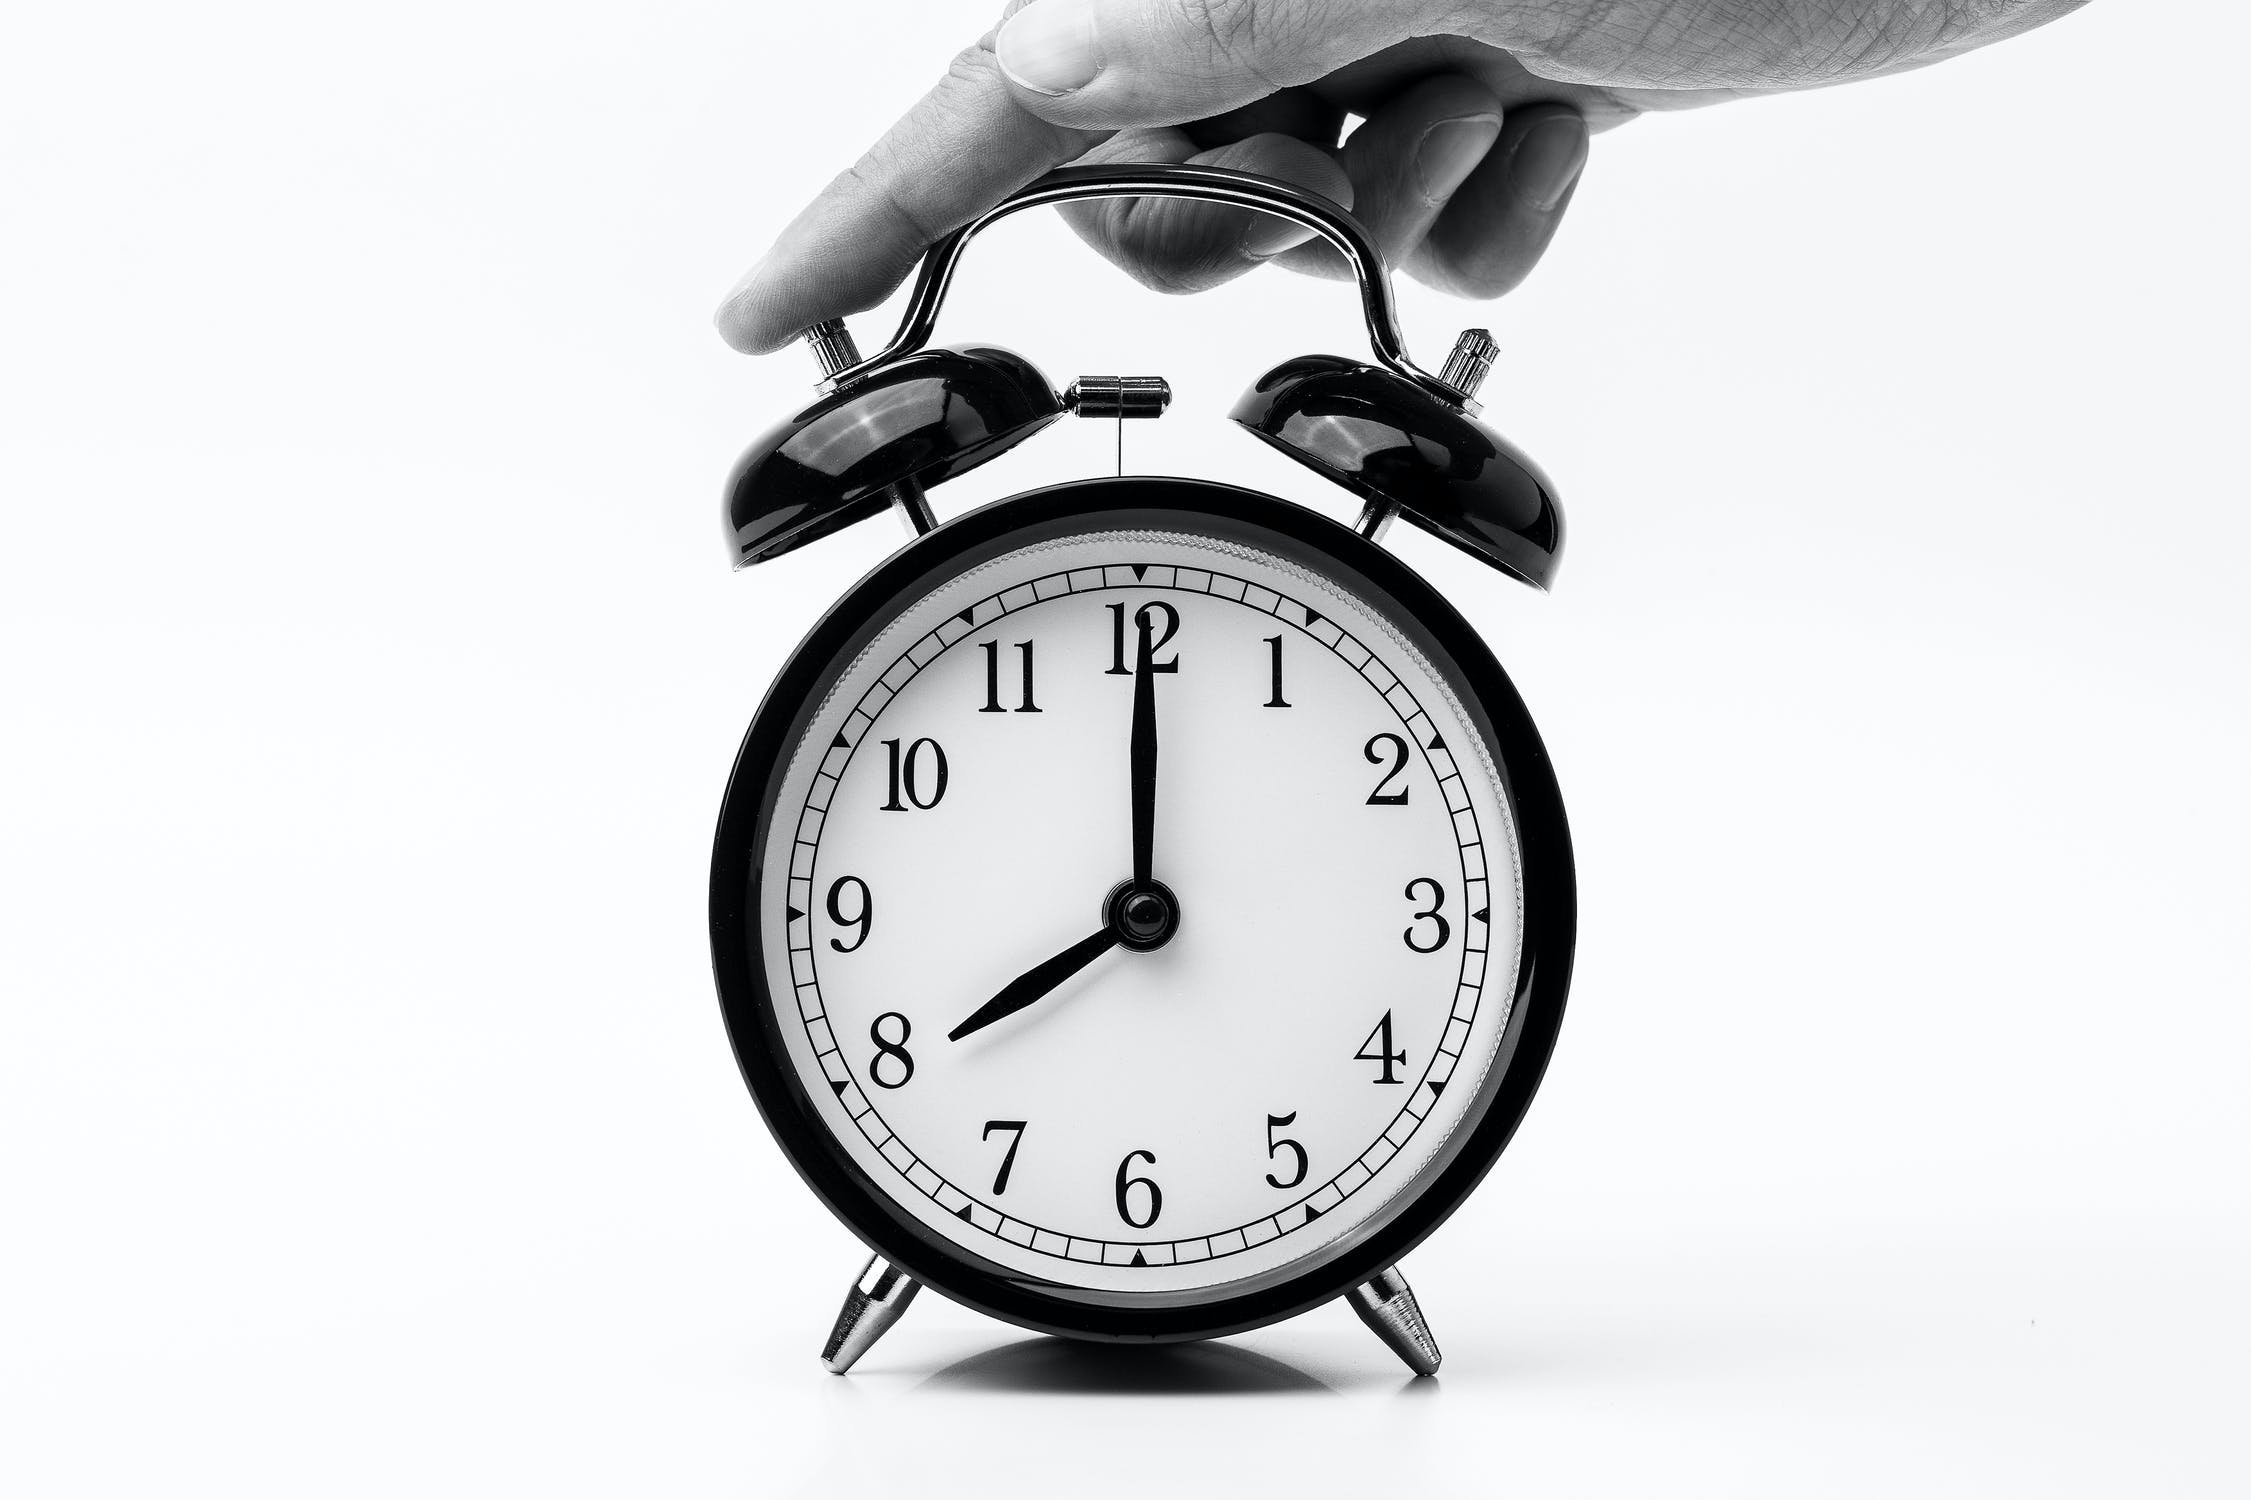 Analog alarm clock in black and white.